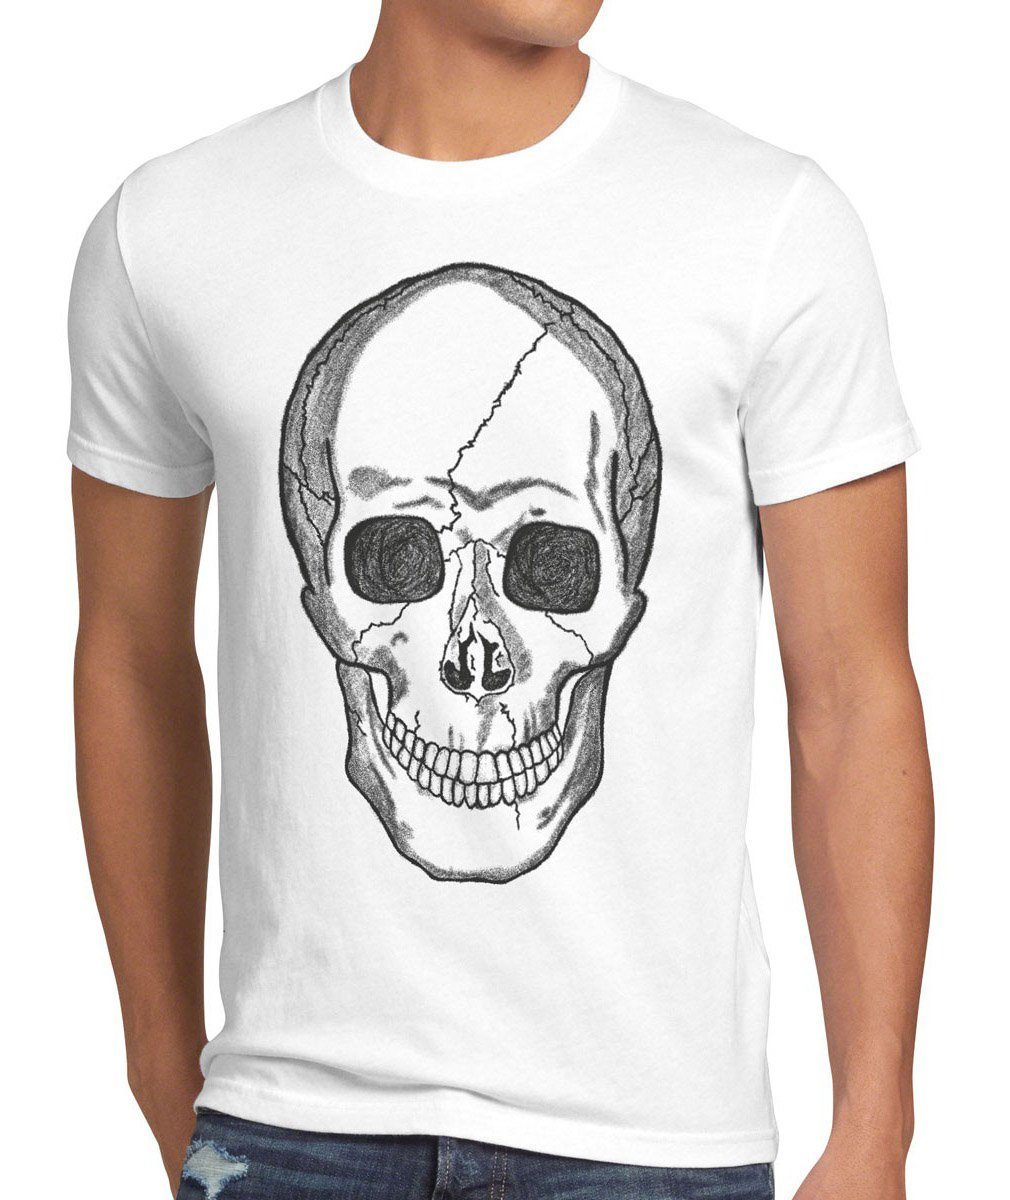 style3 Print-Shirt Herren T-Shirt Skull Tattoo Totenkopf gothic biker knochen Punk Rocker us Harley weiß